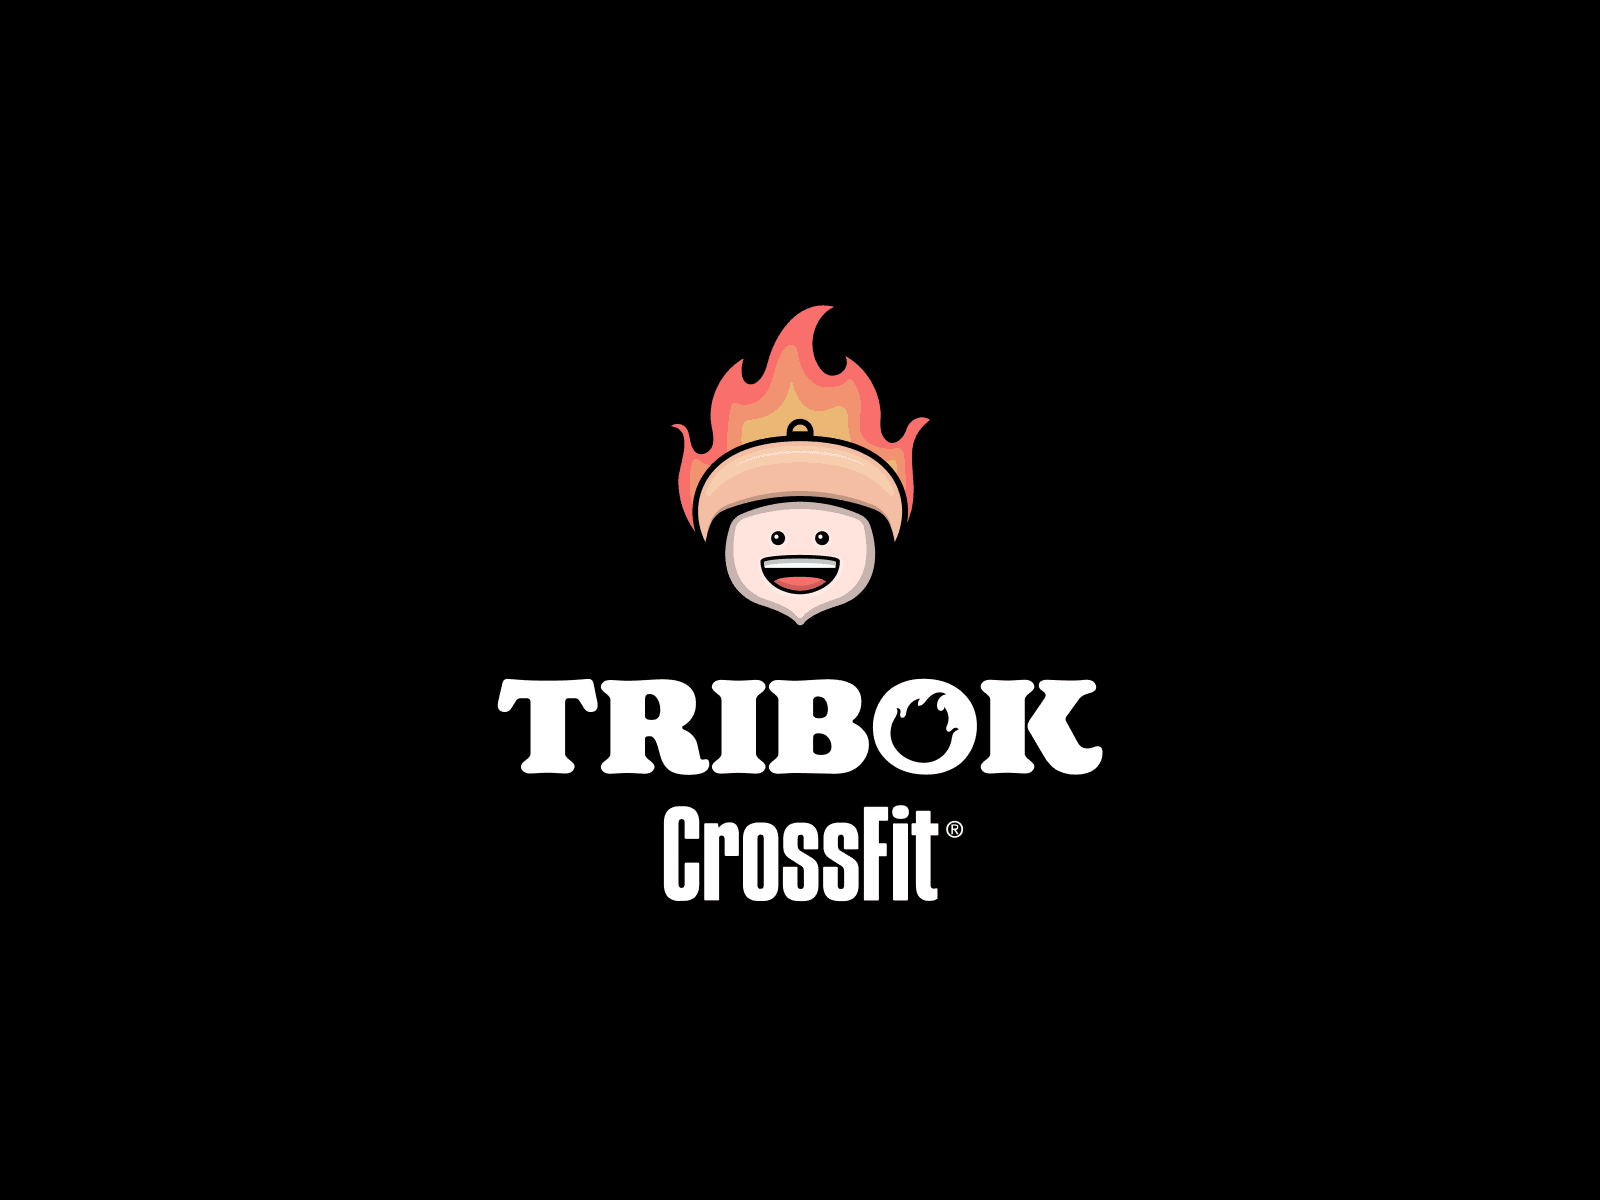 Tribok CrossFit — logo acorn cartoon character crossfit logo gym logo logo design logo design branding logo designer toad vector